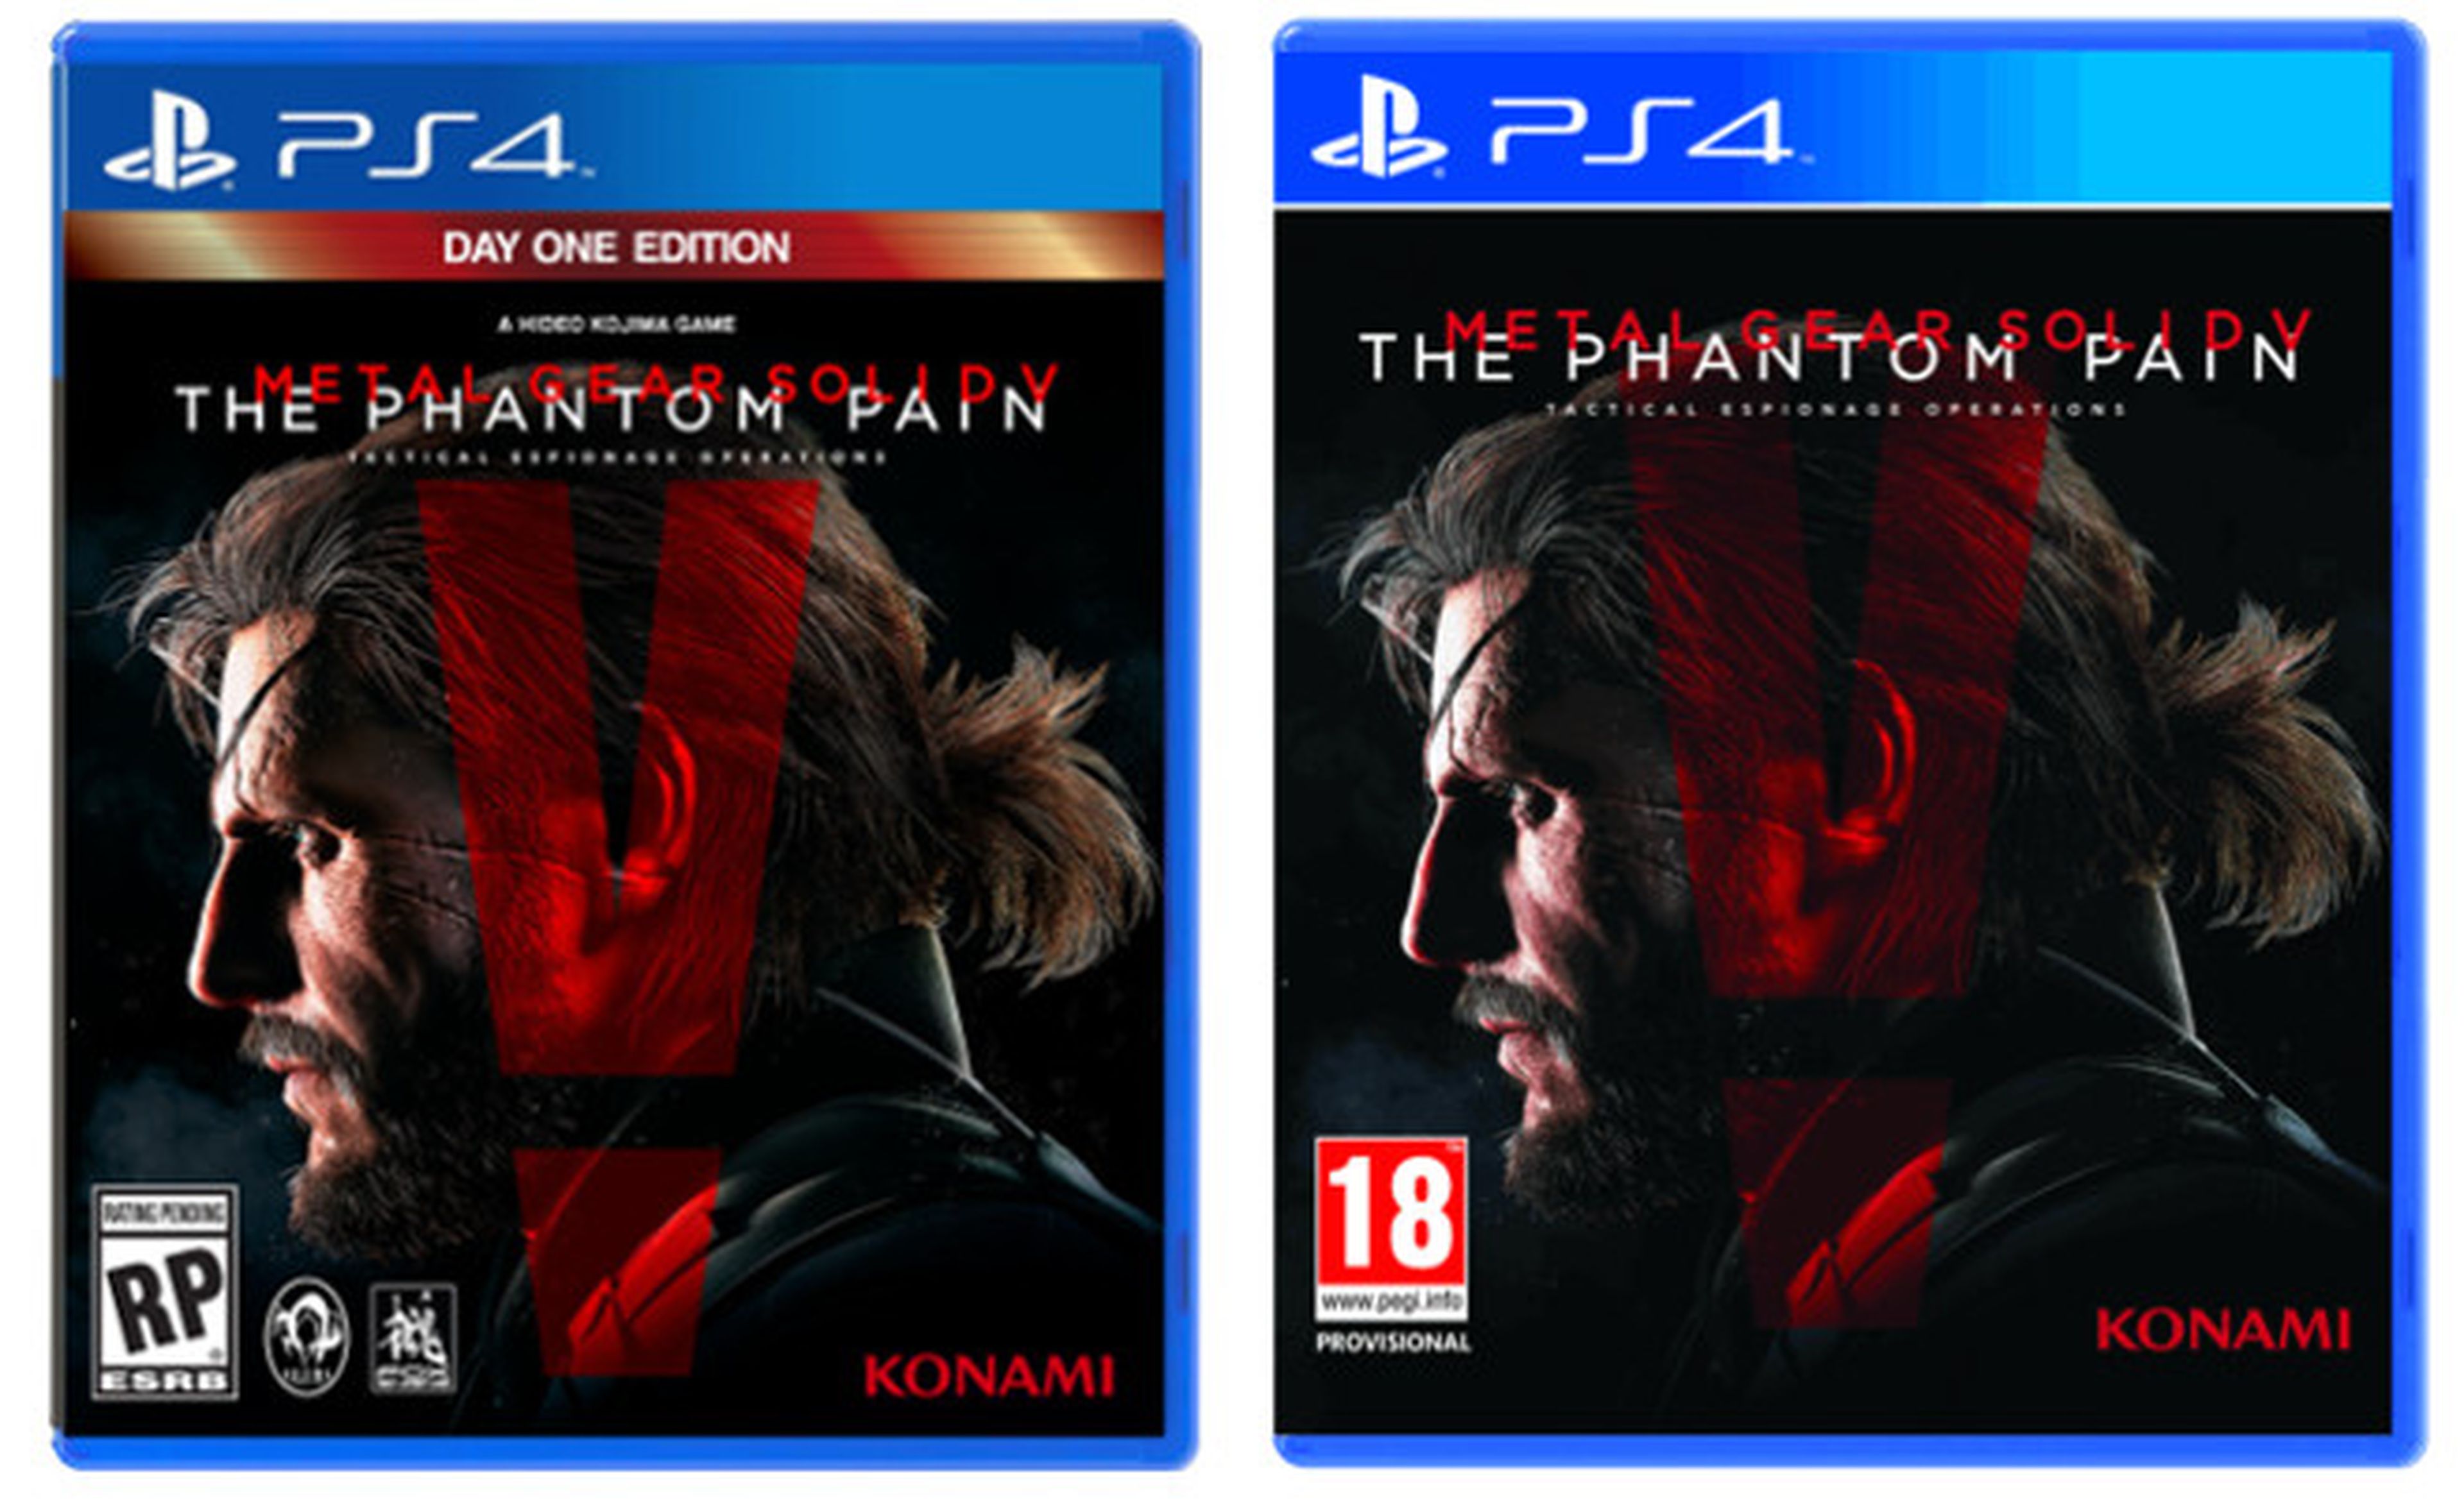 Metal Gear Solid V: The Phantom Pain: Hideo Kojima desaparece de la carátula